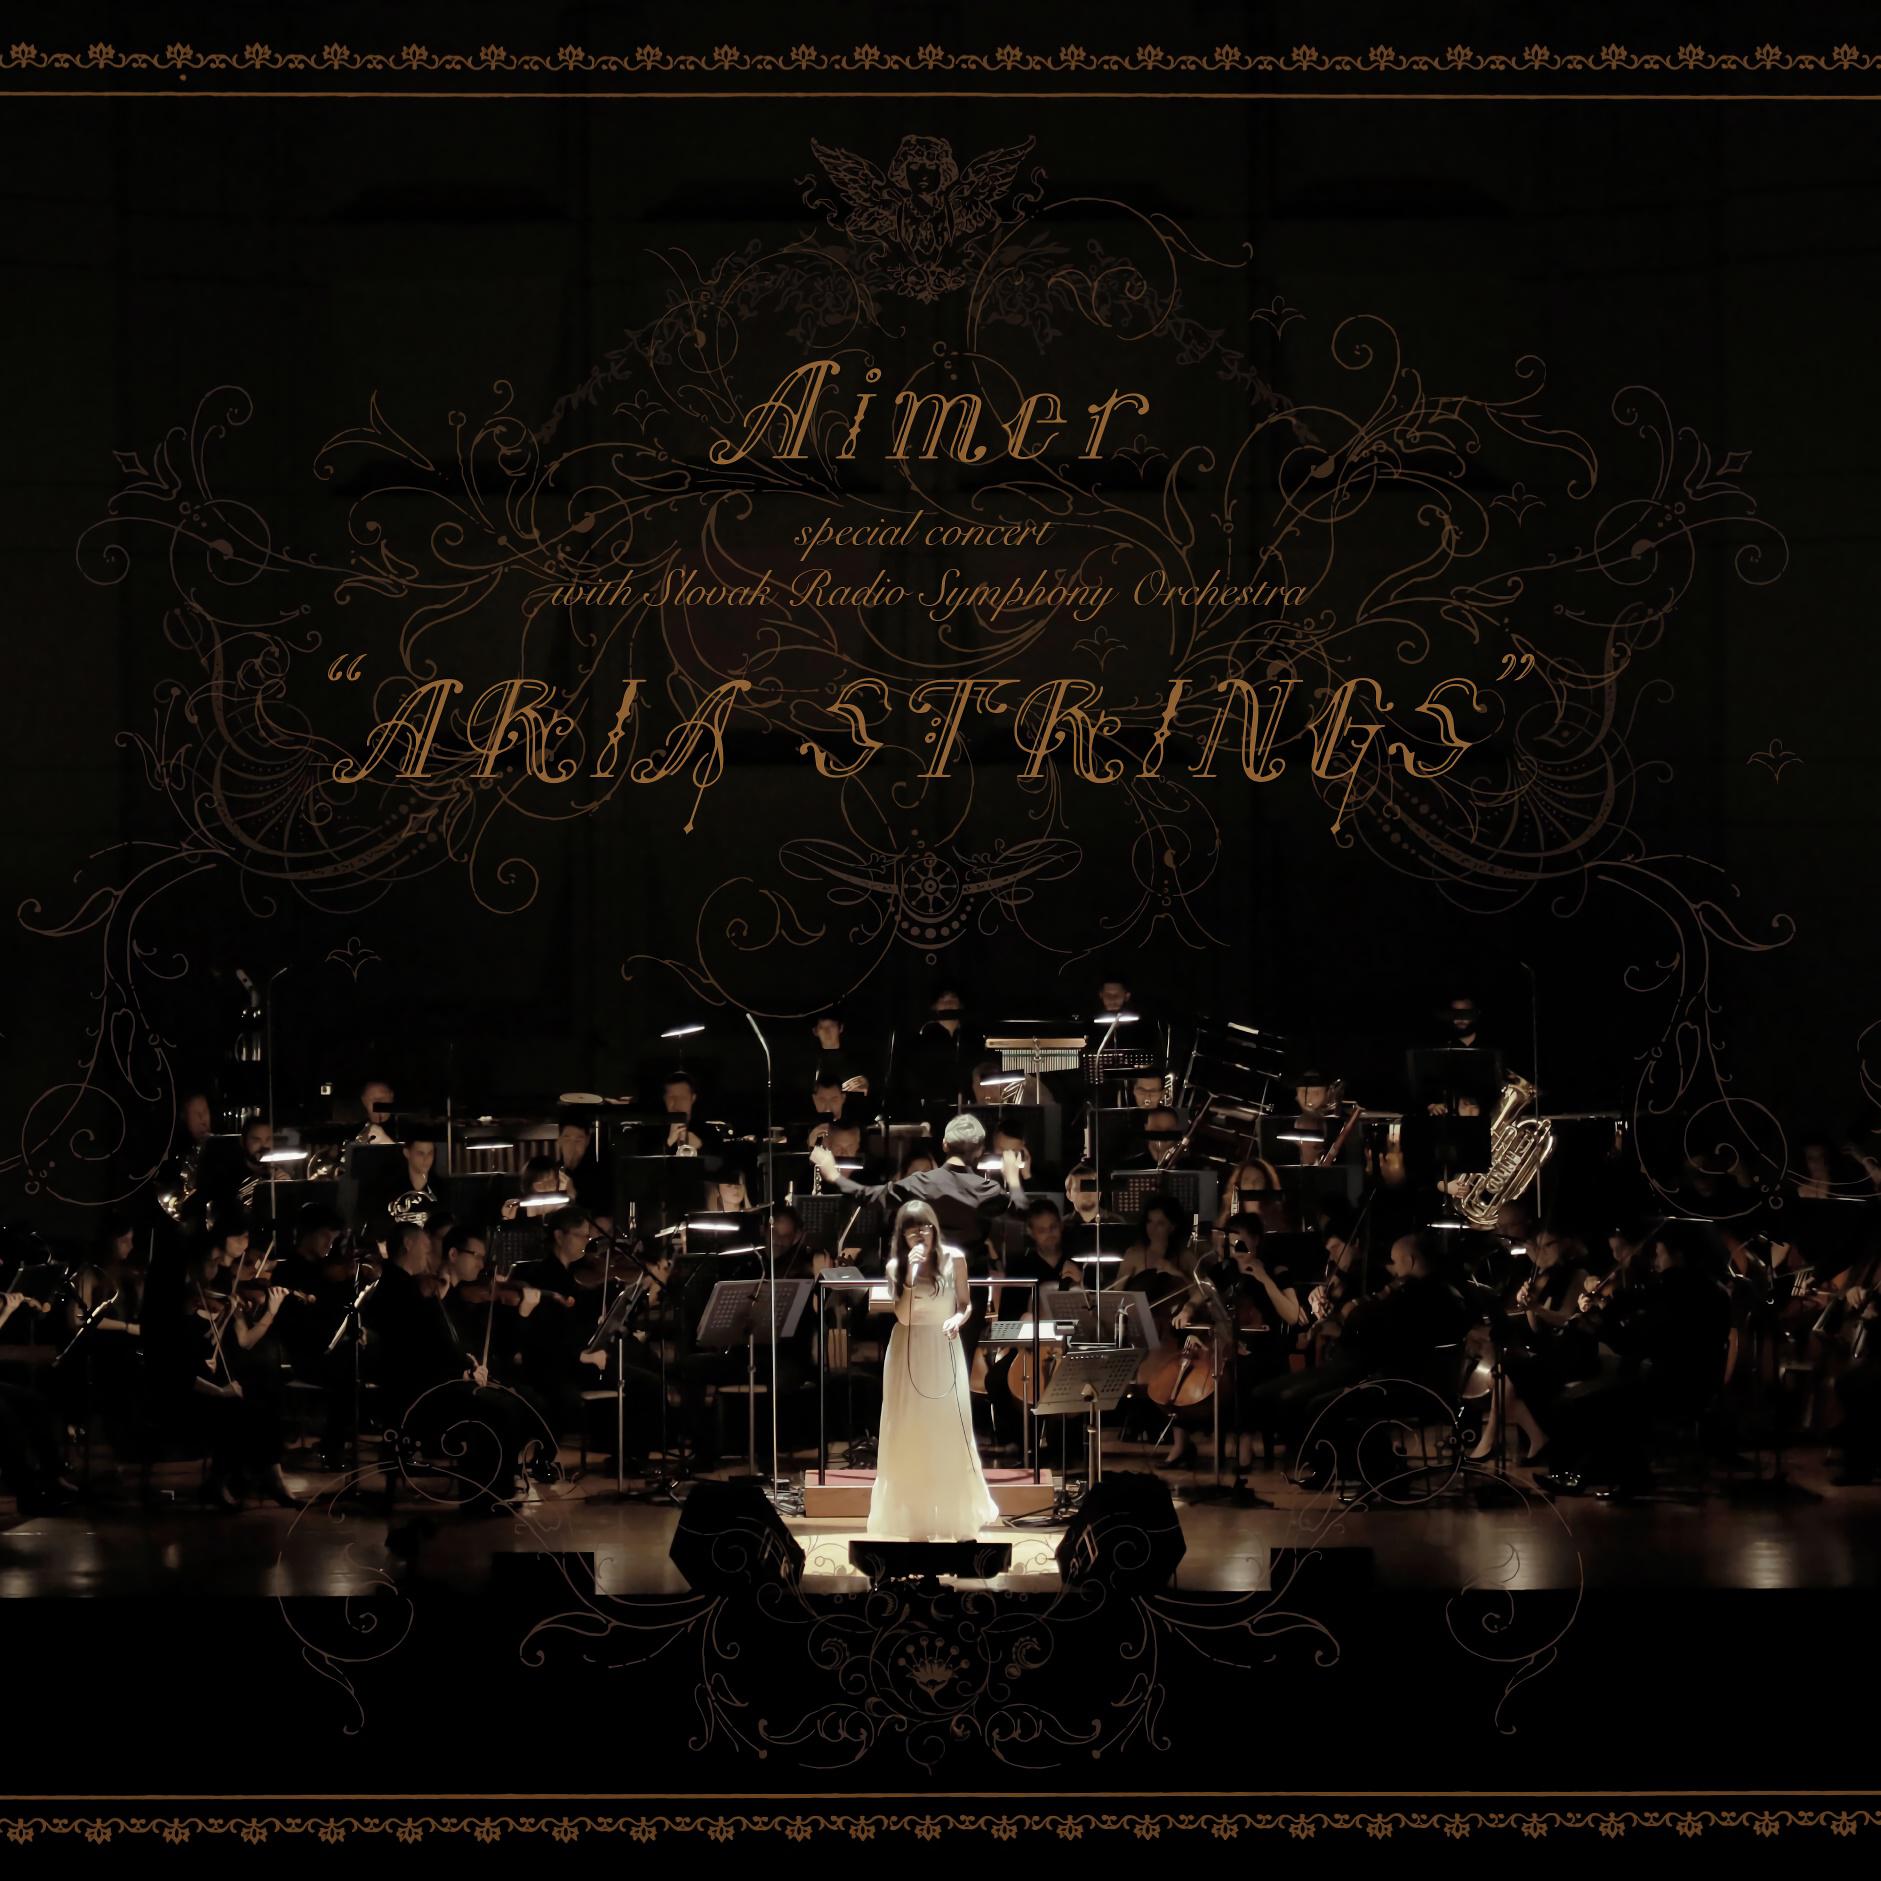 Ref꞉rain歌词 歌手Aimer-专辑Aimer special concert with スロヴァキア国立放送交響楽団 